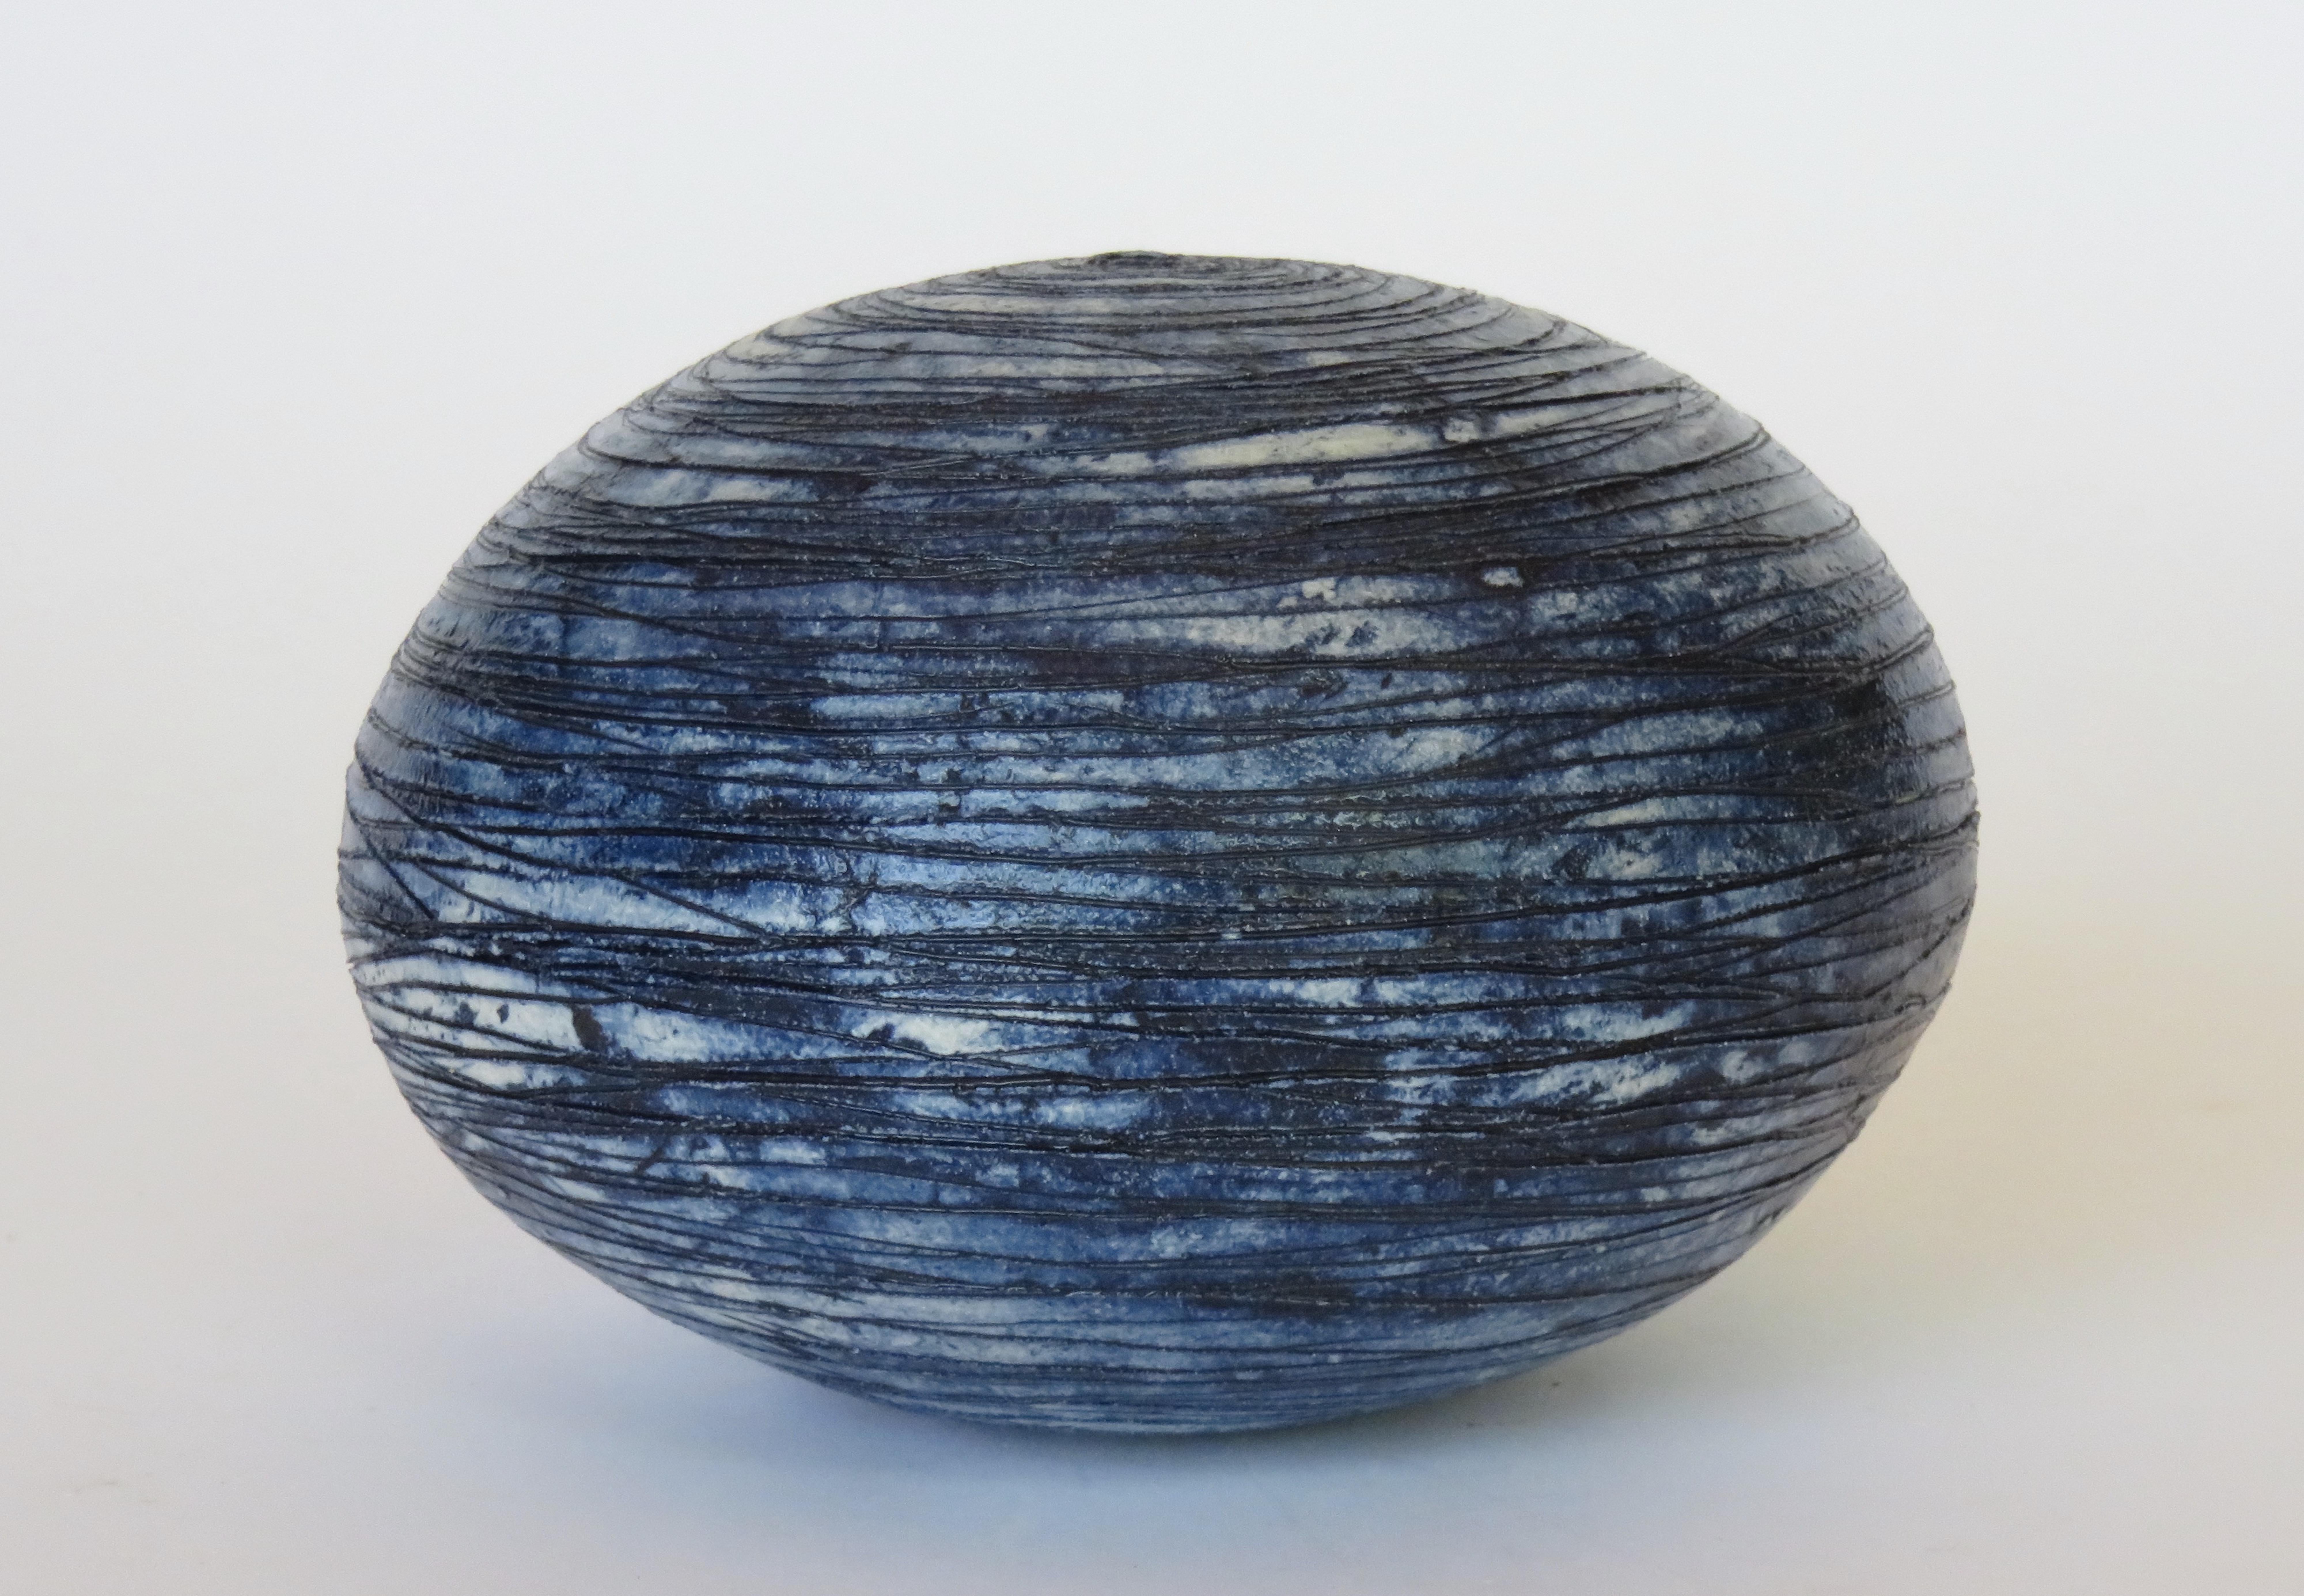 Organic Modern Hand Carved Sphere, Ceramic Sculpture in Deep Blue Wash